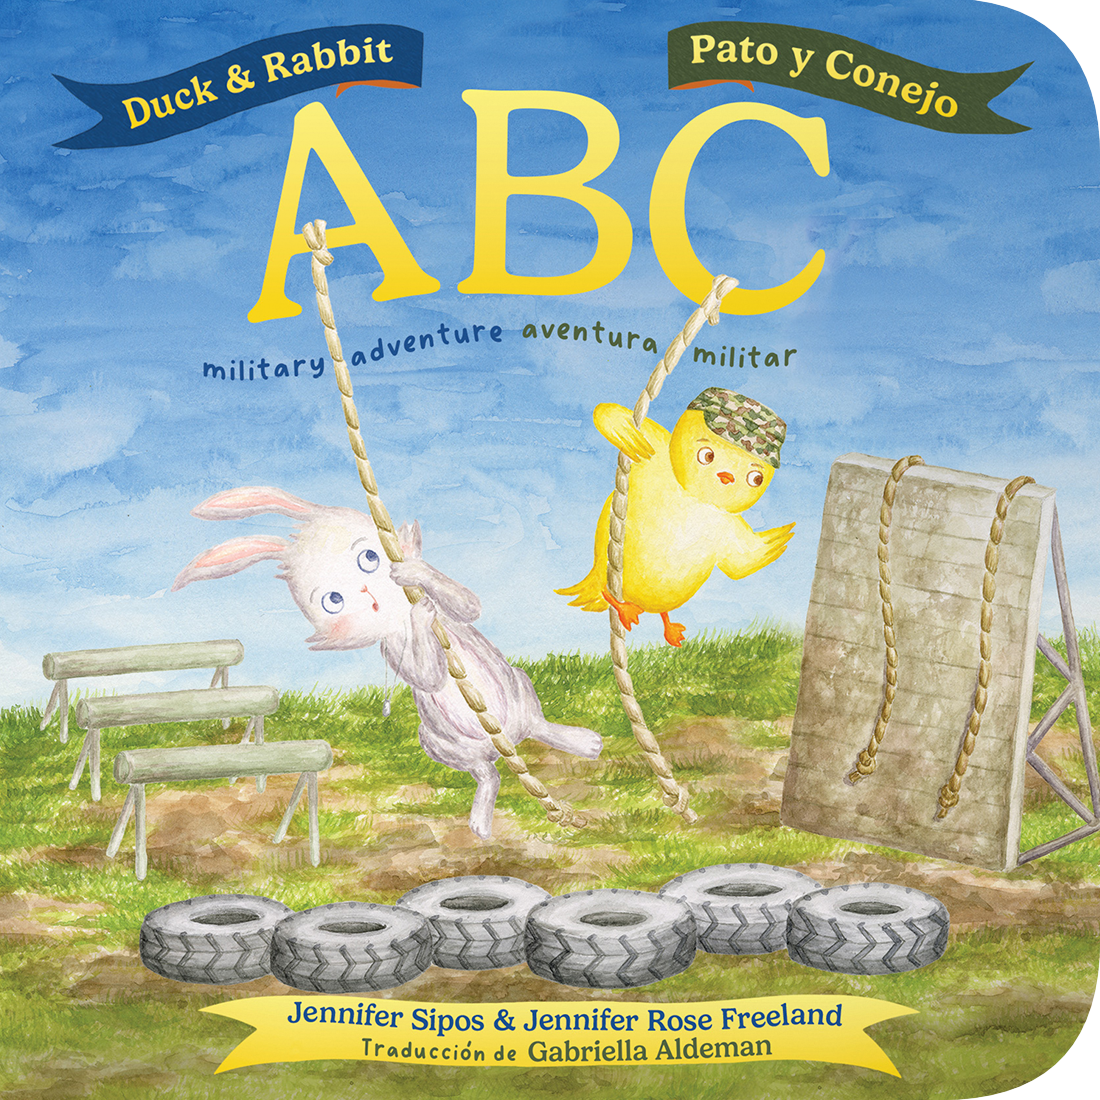 Duck & Rabbit ABC military adventure / Pato y Conejo ABC aventura militar by Jennifer Sipos, Jennifer Rose Freeland, Gabriella Aldeman, published by Elva Resa Publishing